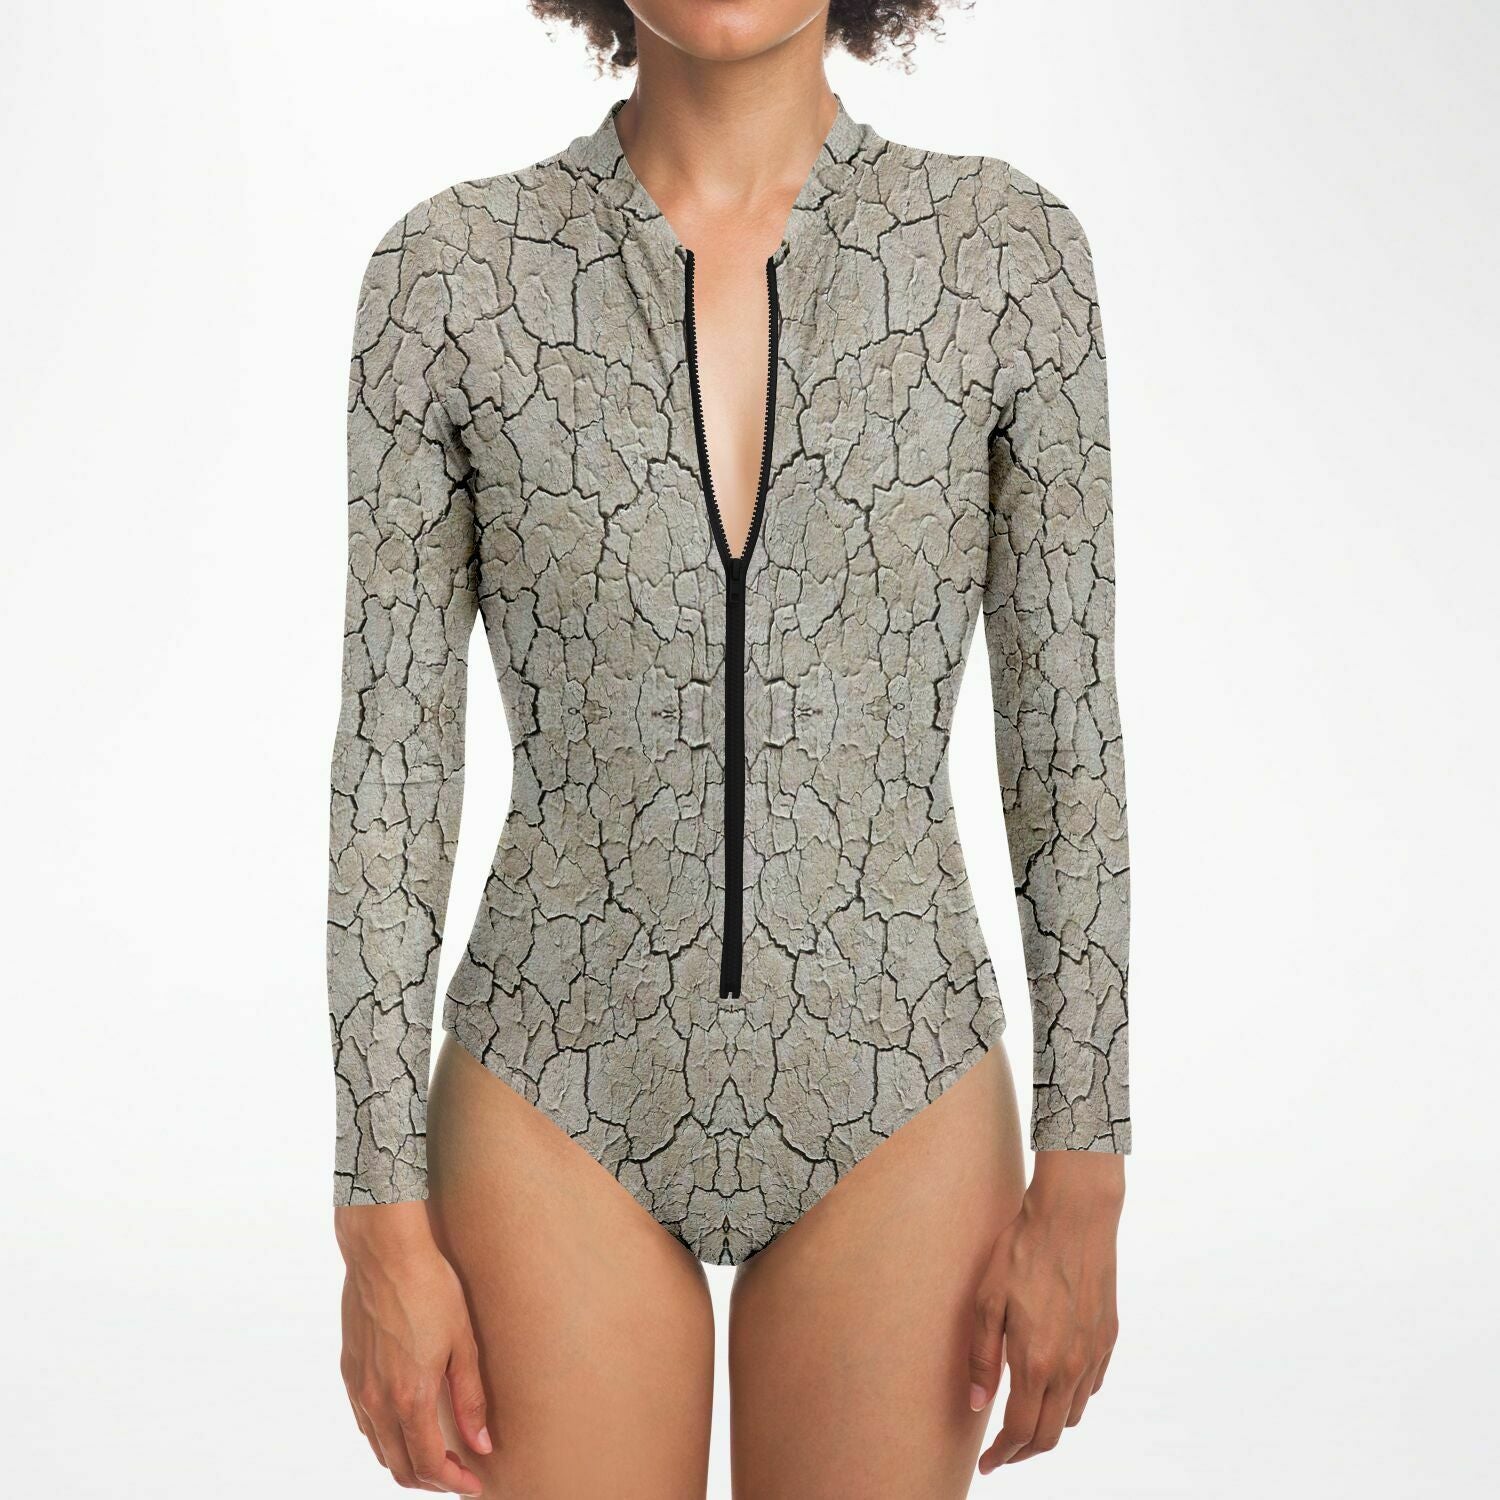 Black Rock City Long Sleeve Swimsuit | Full Piece Bodysuit | Front Zipper Bathing Suit | 50+ UPF Protection, UV Swimwear